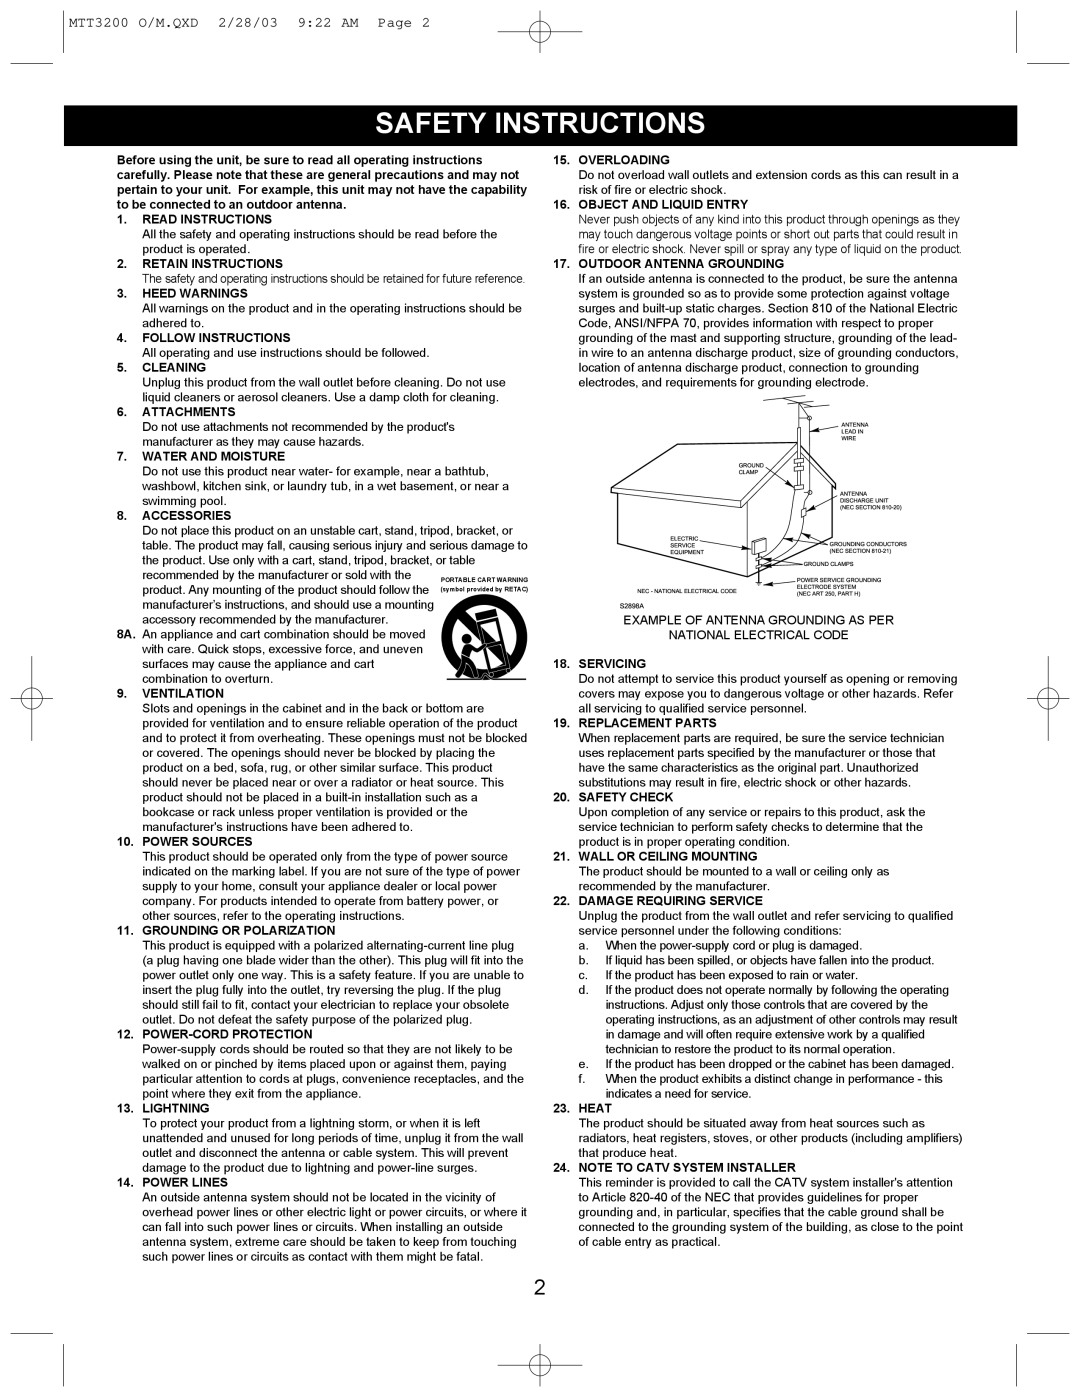 Memorex manual Safety Instructions, MTT3200 O/M.QXD 2/28/03 922 AM Page 